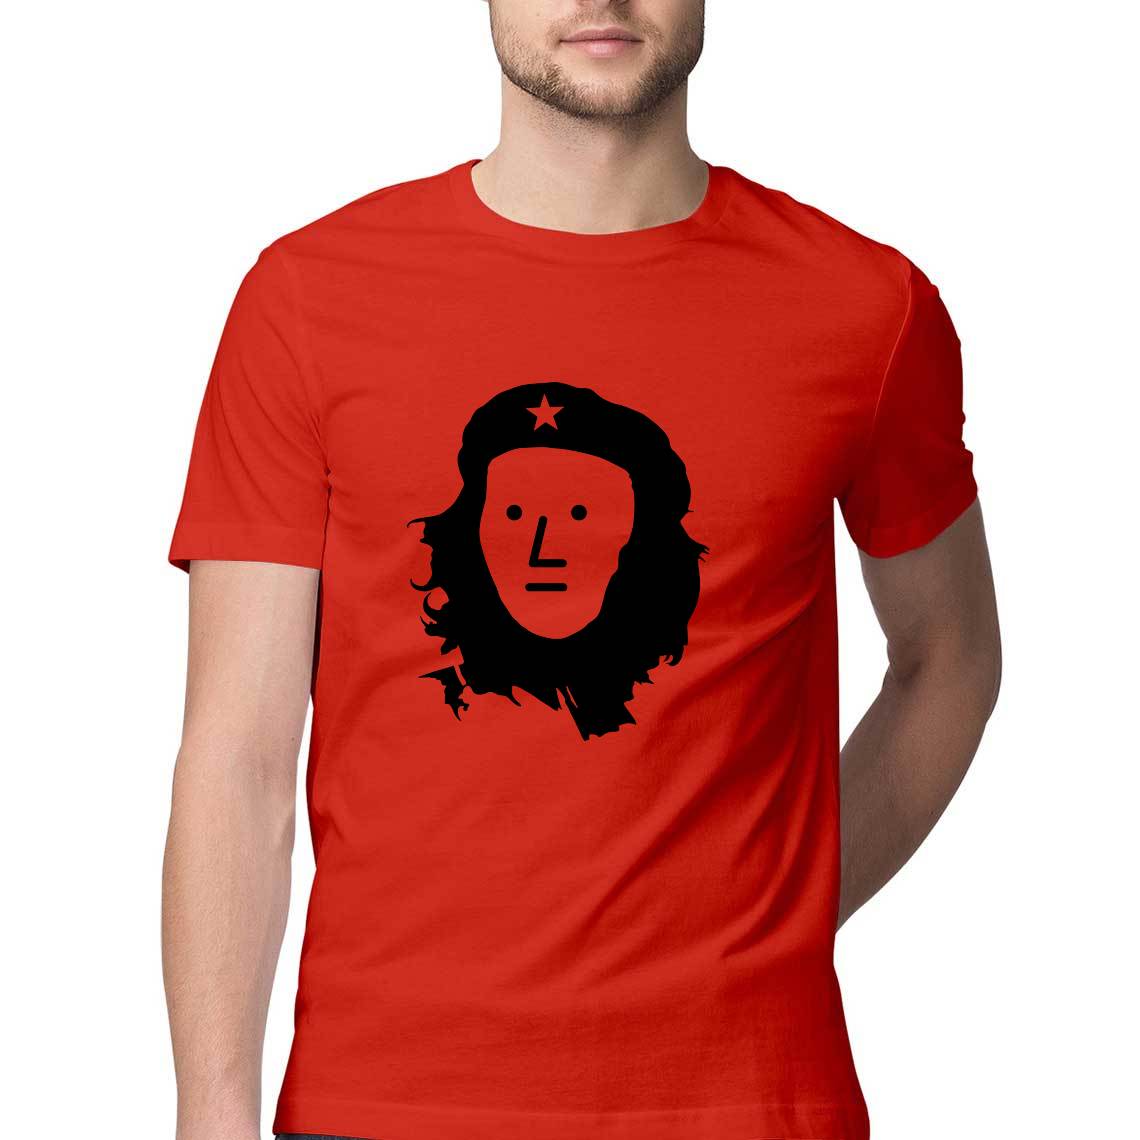 NPChe Guevara T-Shirt Funny NPC Che Meme MAGA Non-Player Tee T-Shirt